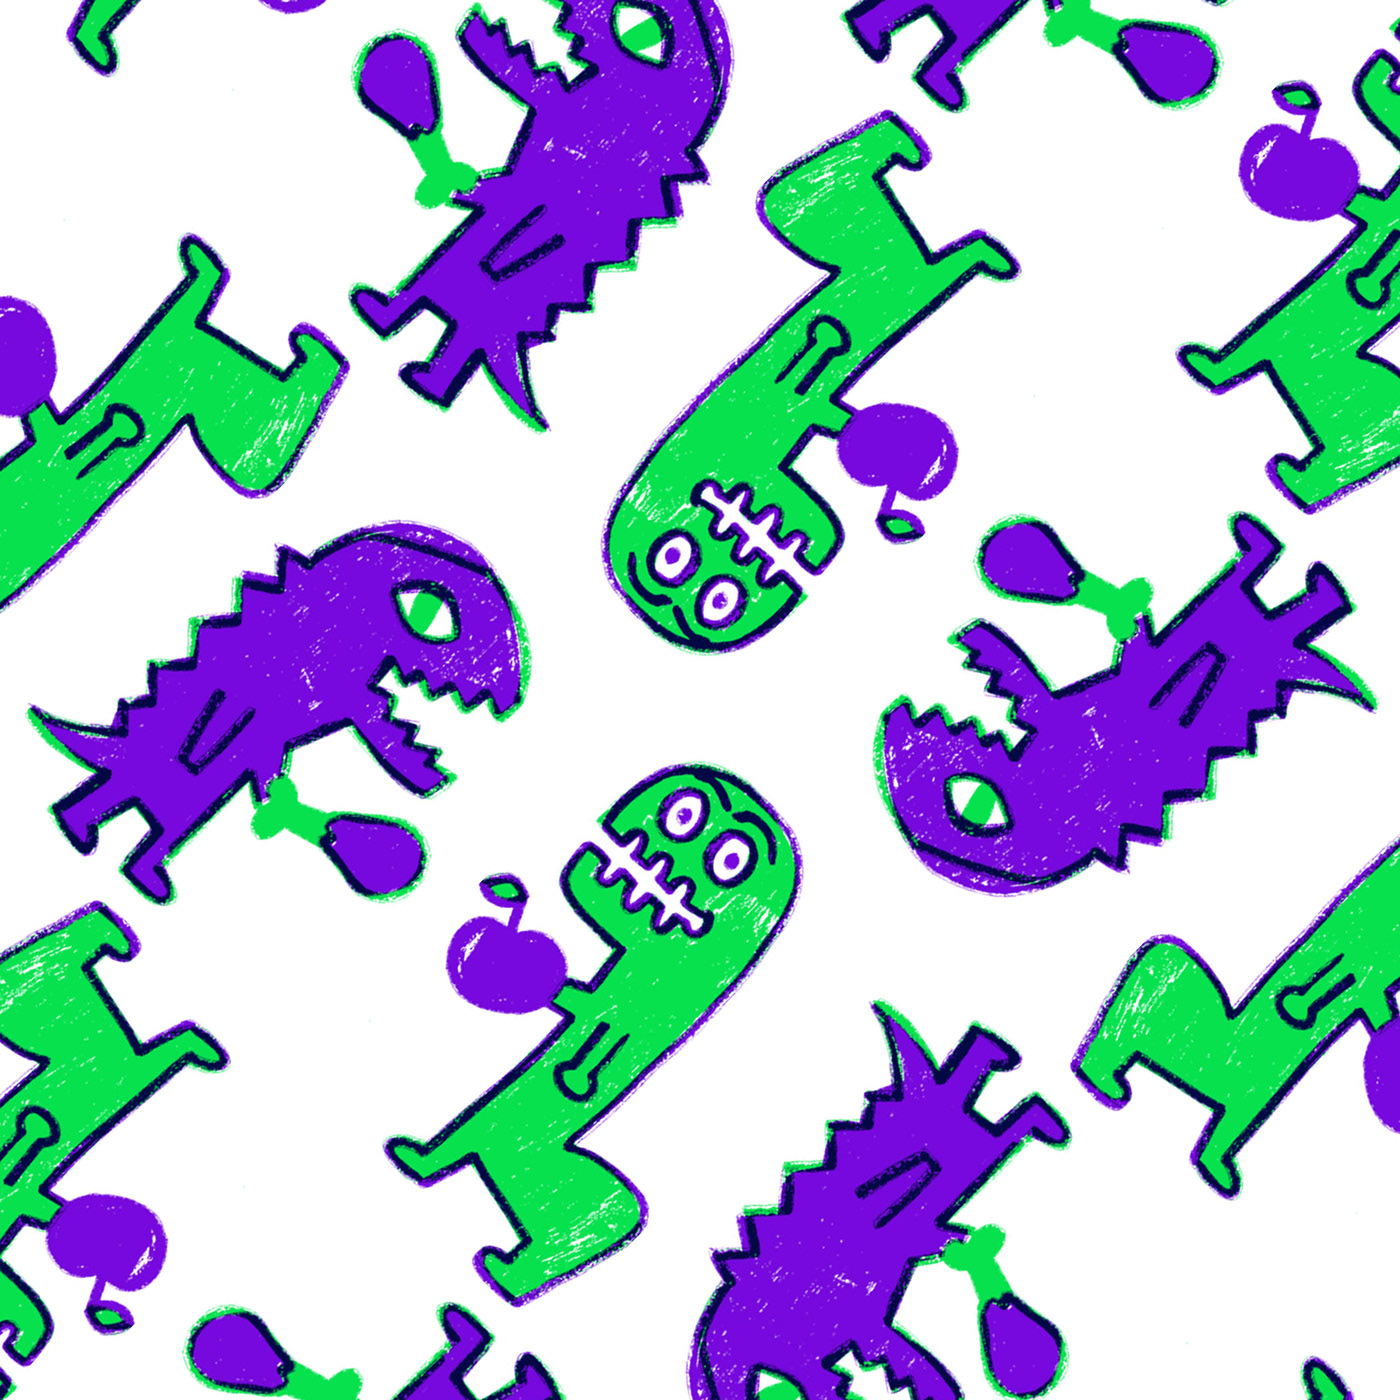 poster ILLUSTRATION  Character design  Graphic Designer Cat Dinosaur pattern pattern design  Drawing  dog